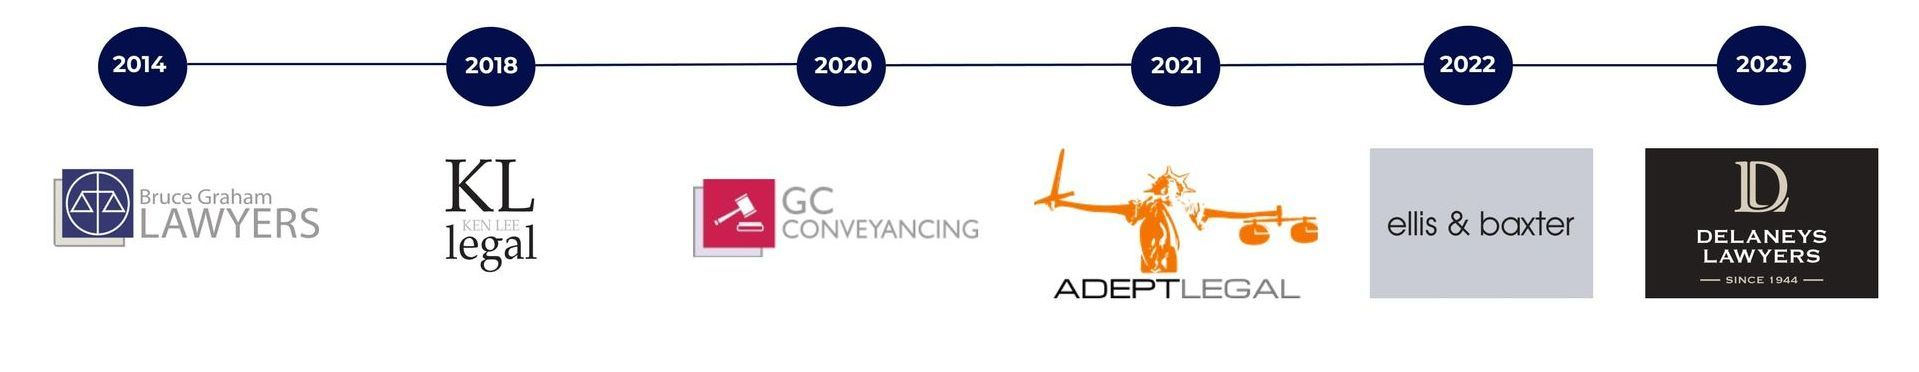 GC Conveyancing and Adept Legal Logo